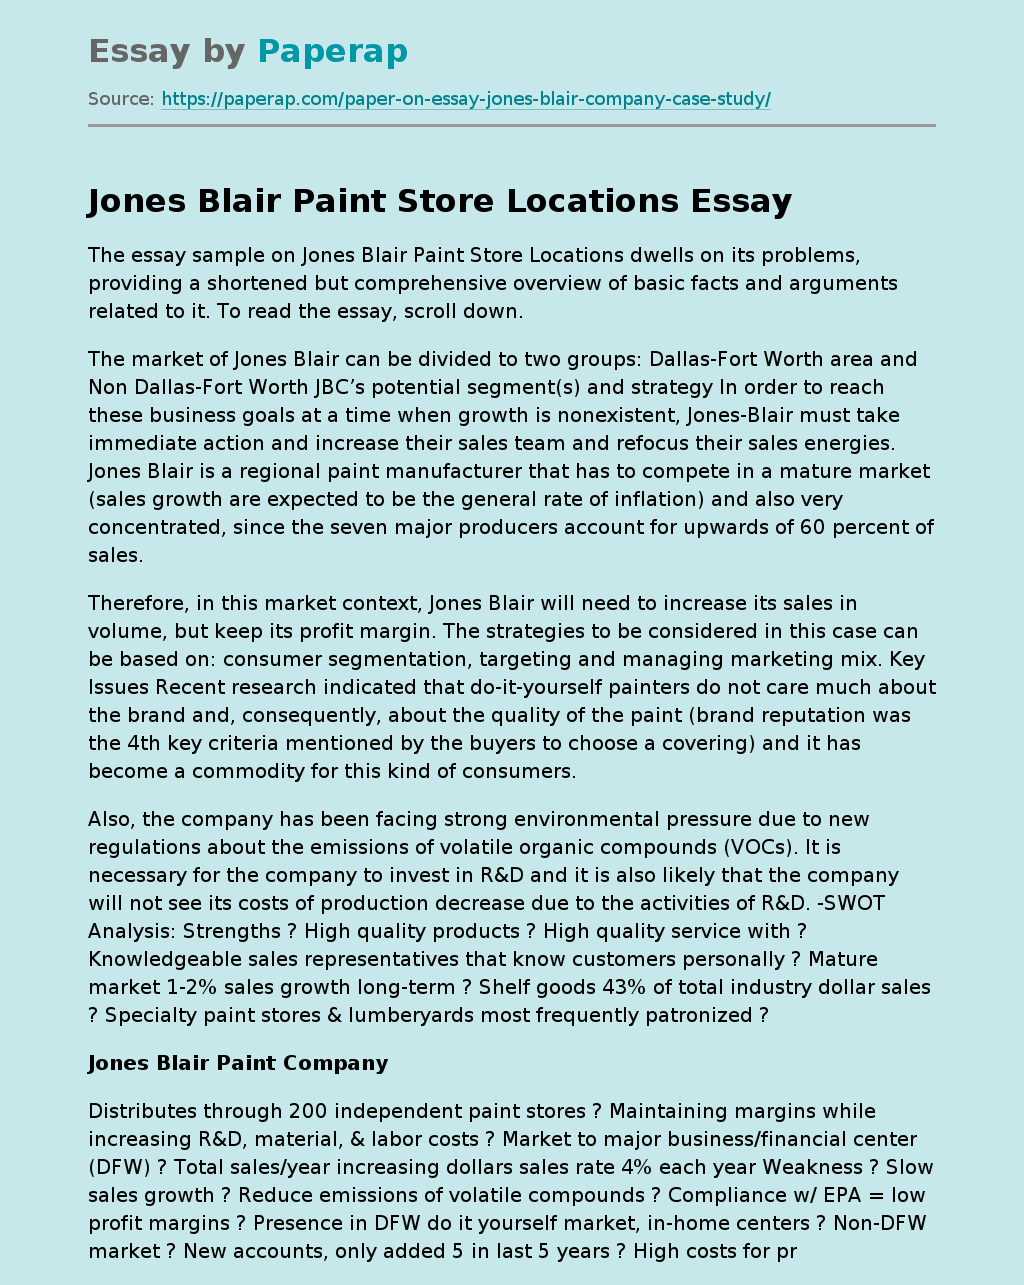 Jones Blair Paint Store Locations